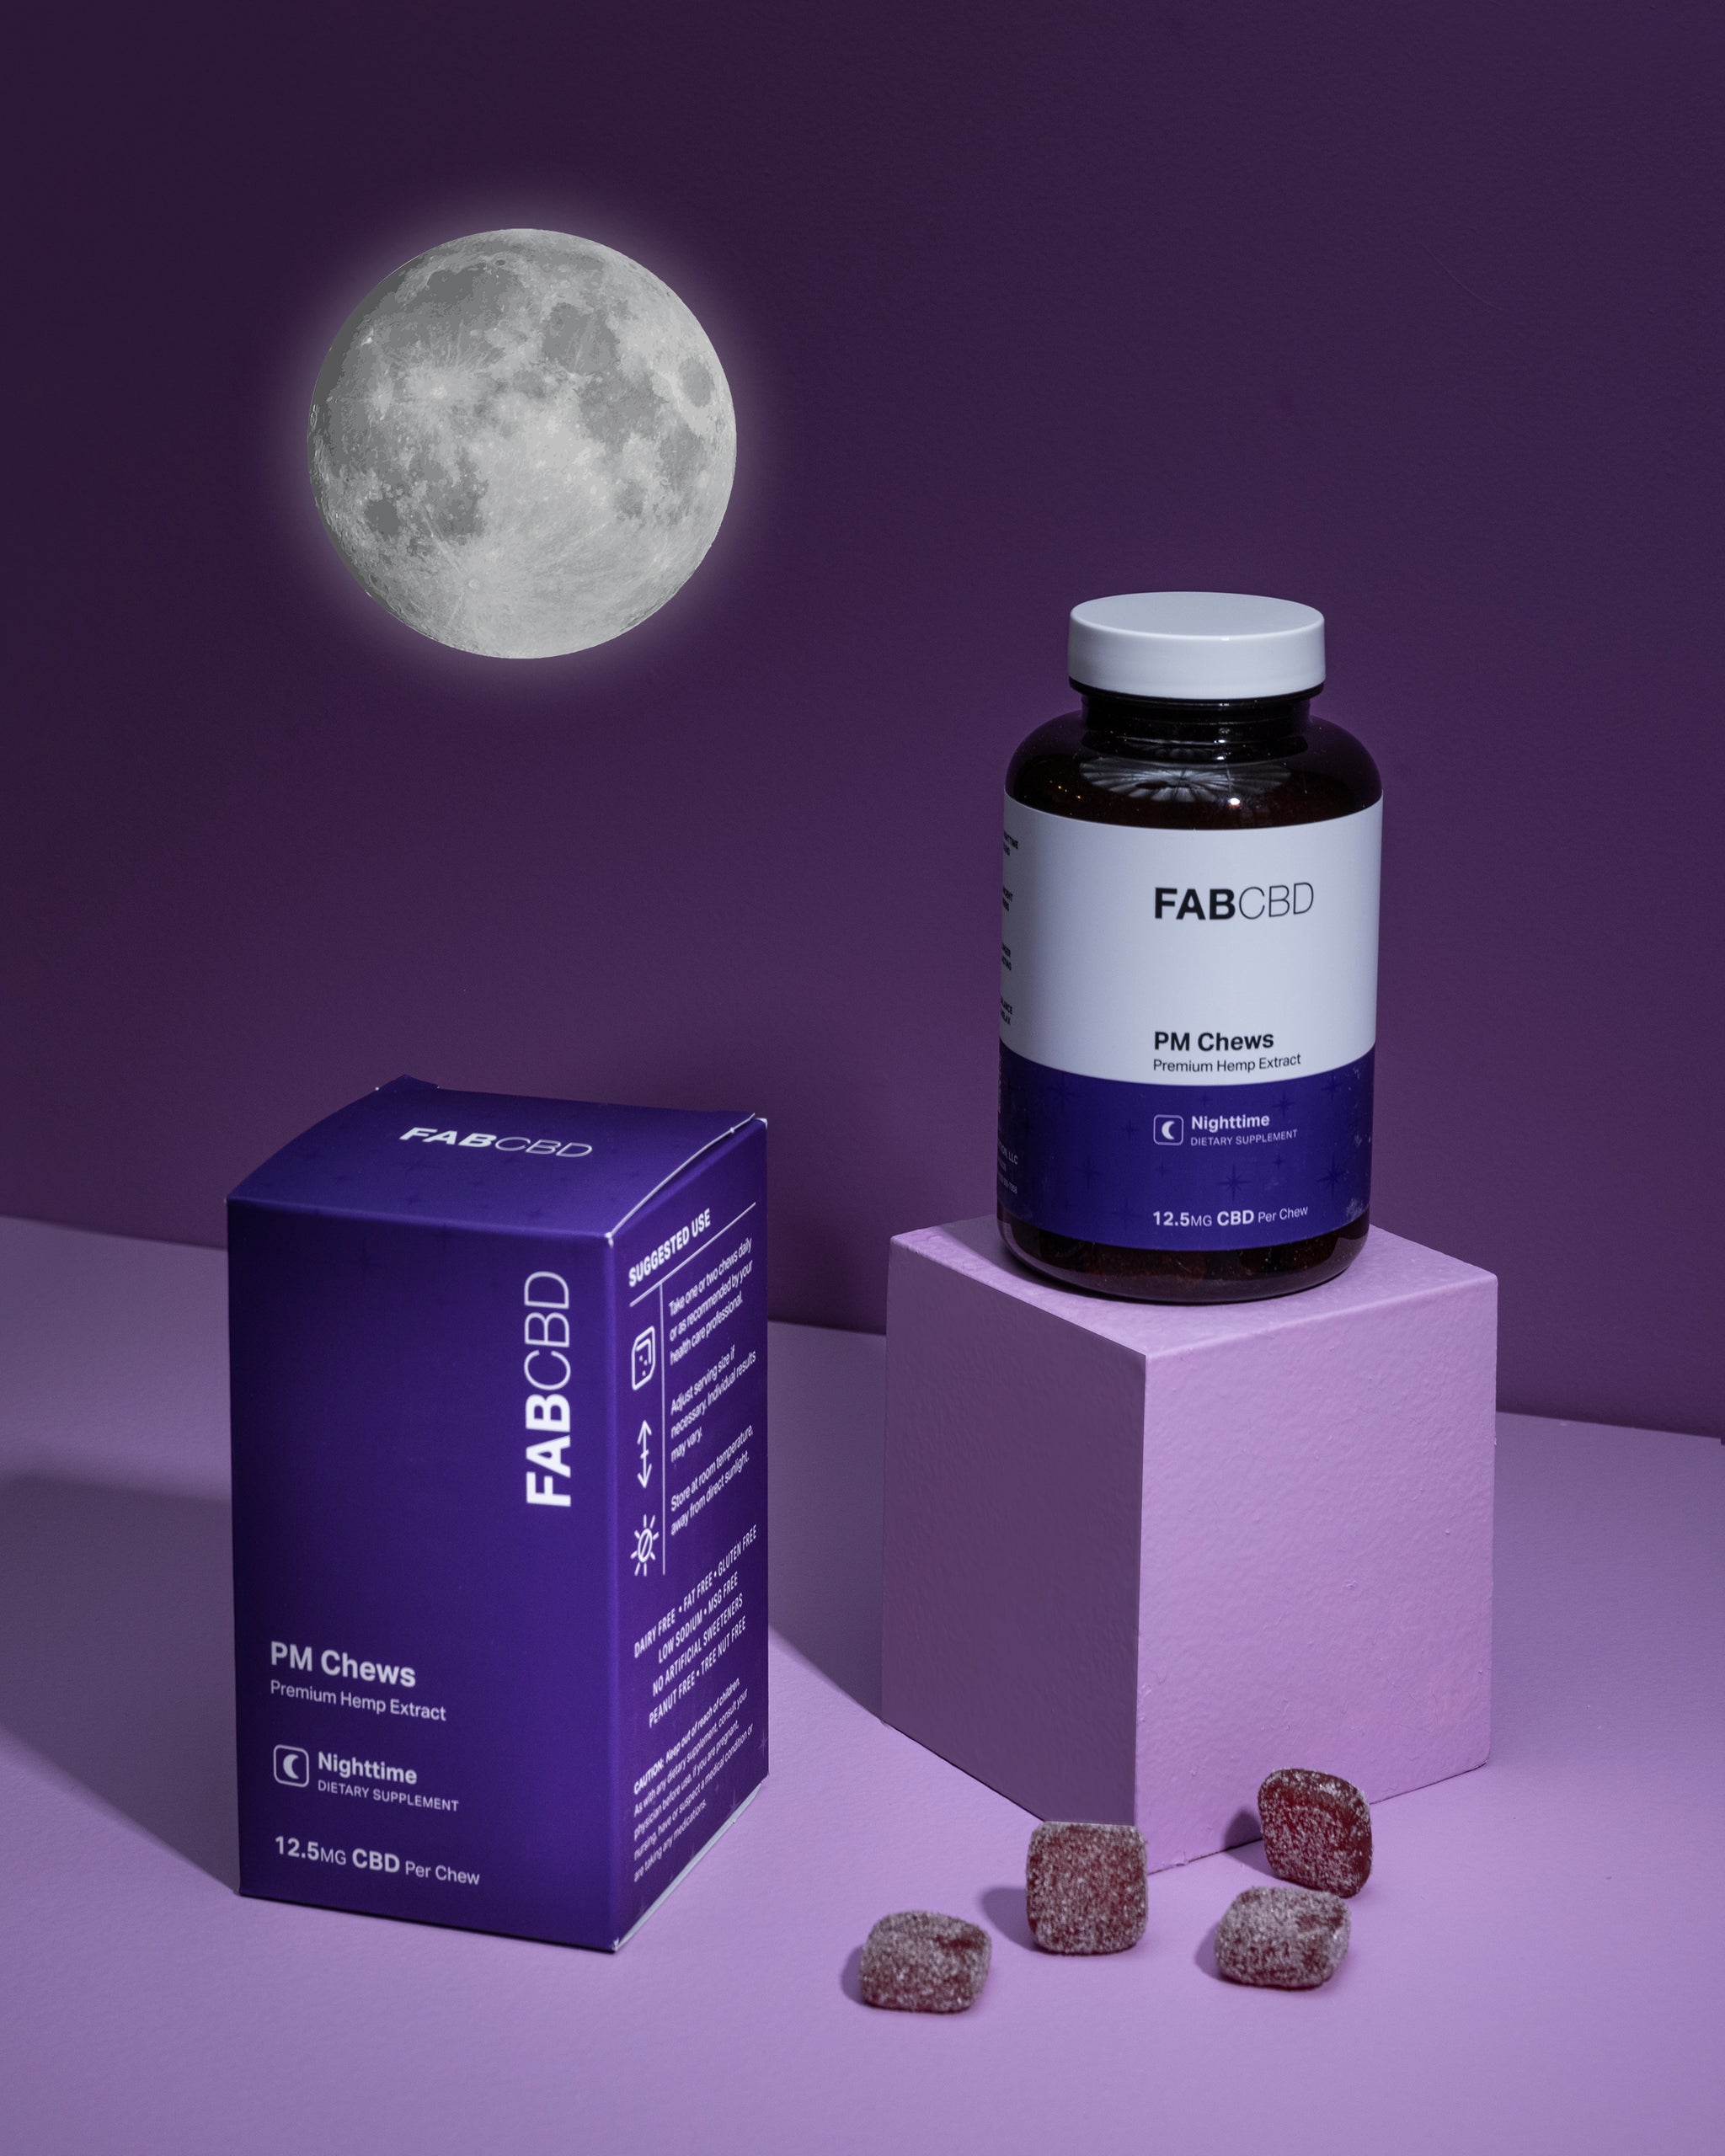 Premium Sleep Products – Moonlight